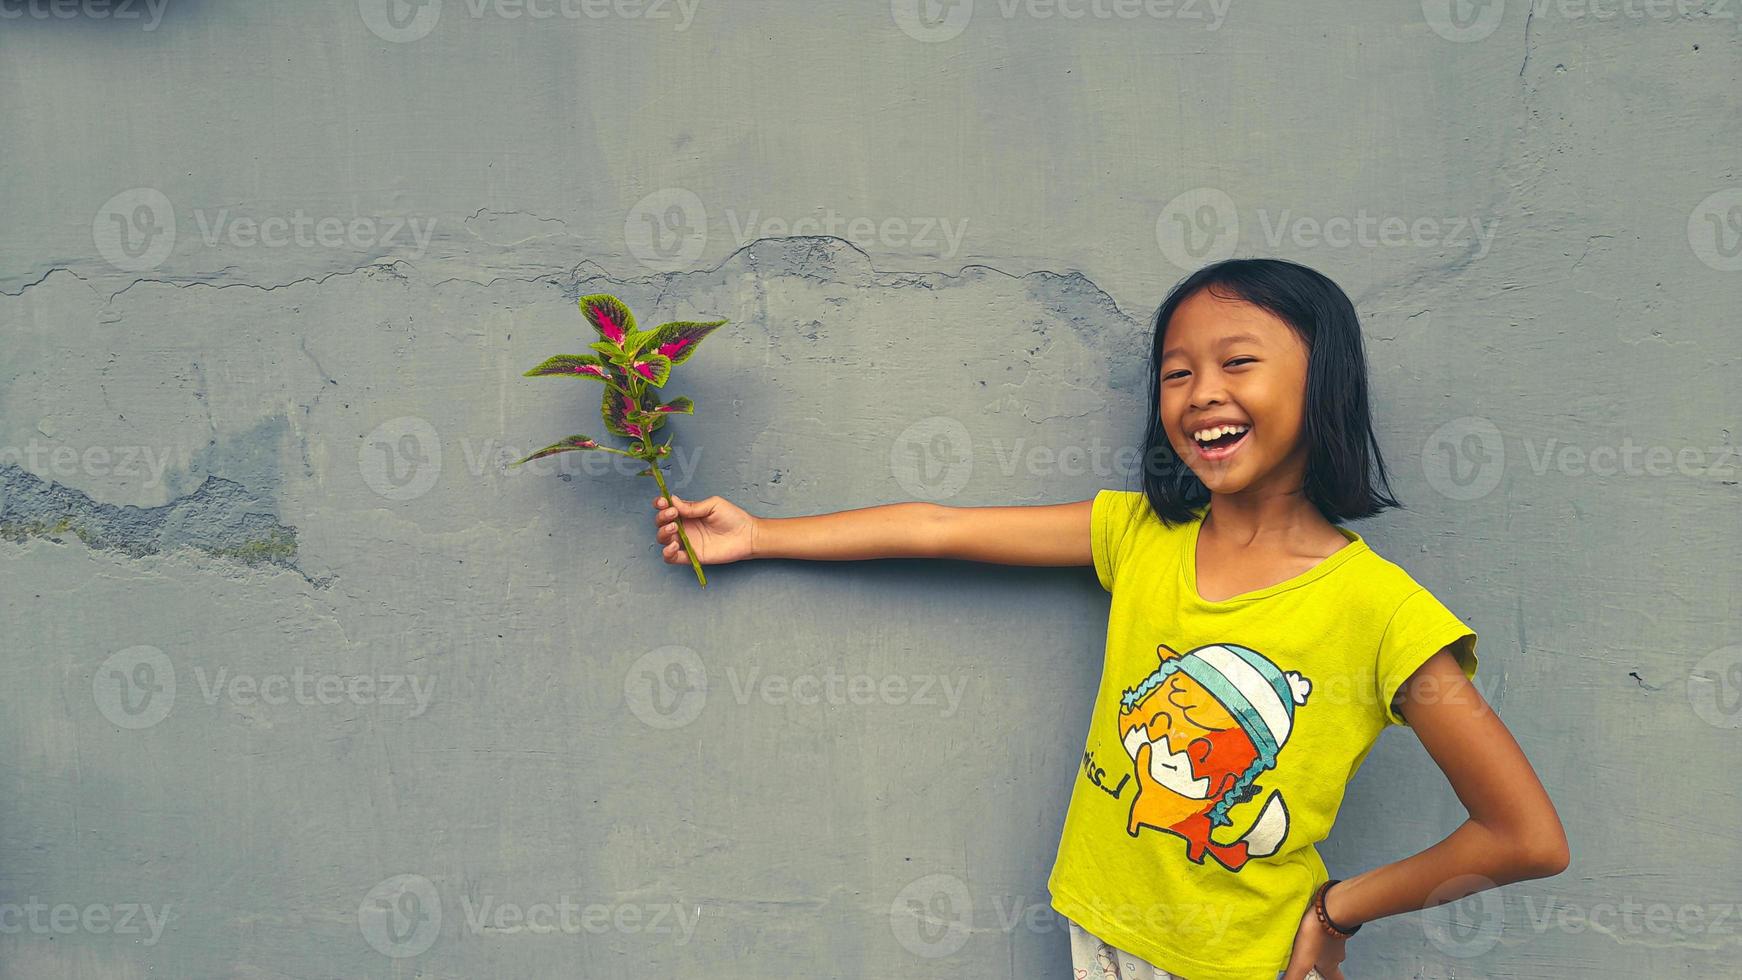 weinig meisje Holding jong fabriek. groen bladeren. ecologie concept. licht kleur achtergrond. foto